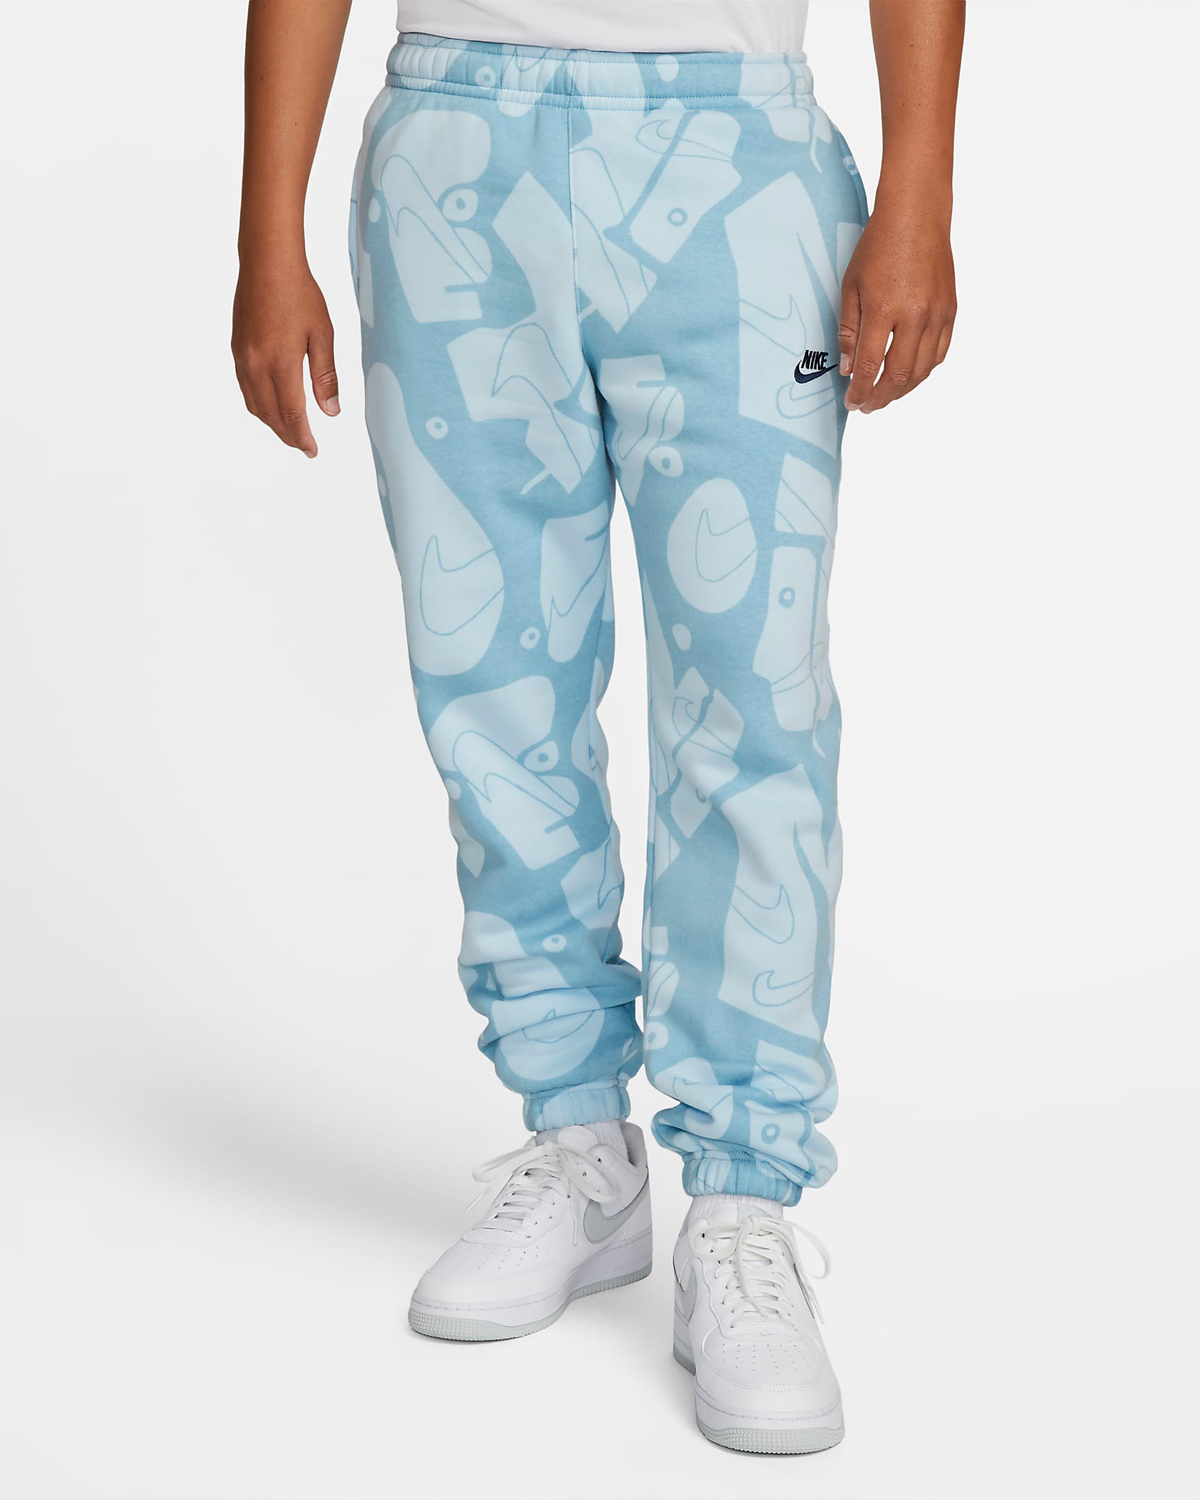 Nike-Club-Fleece-Printed-Joggers-Leche-Blue-1